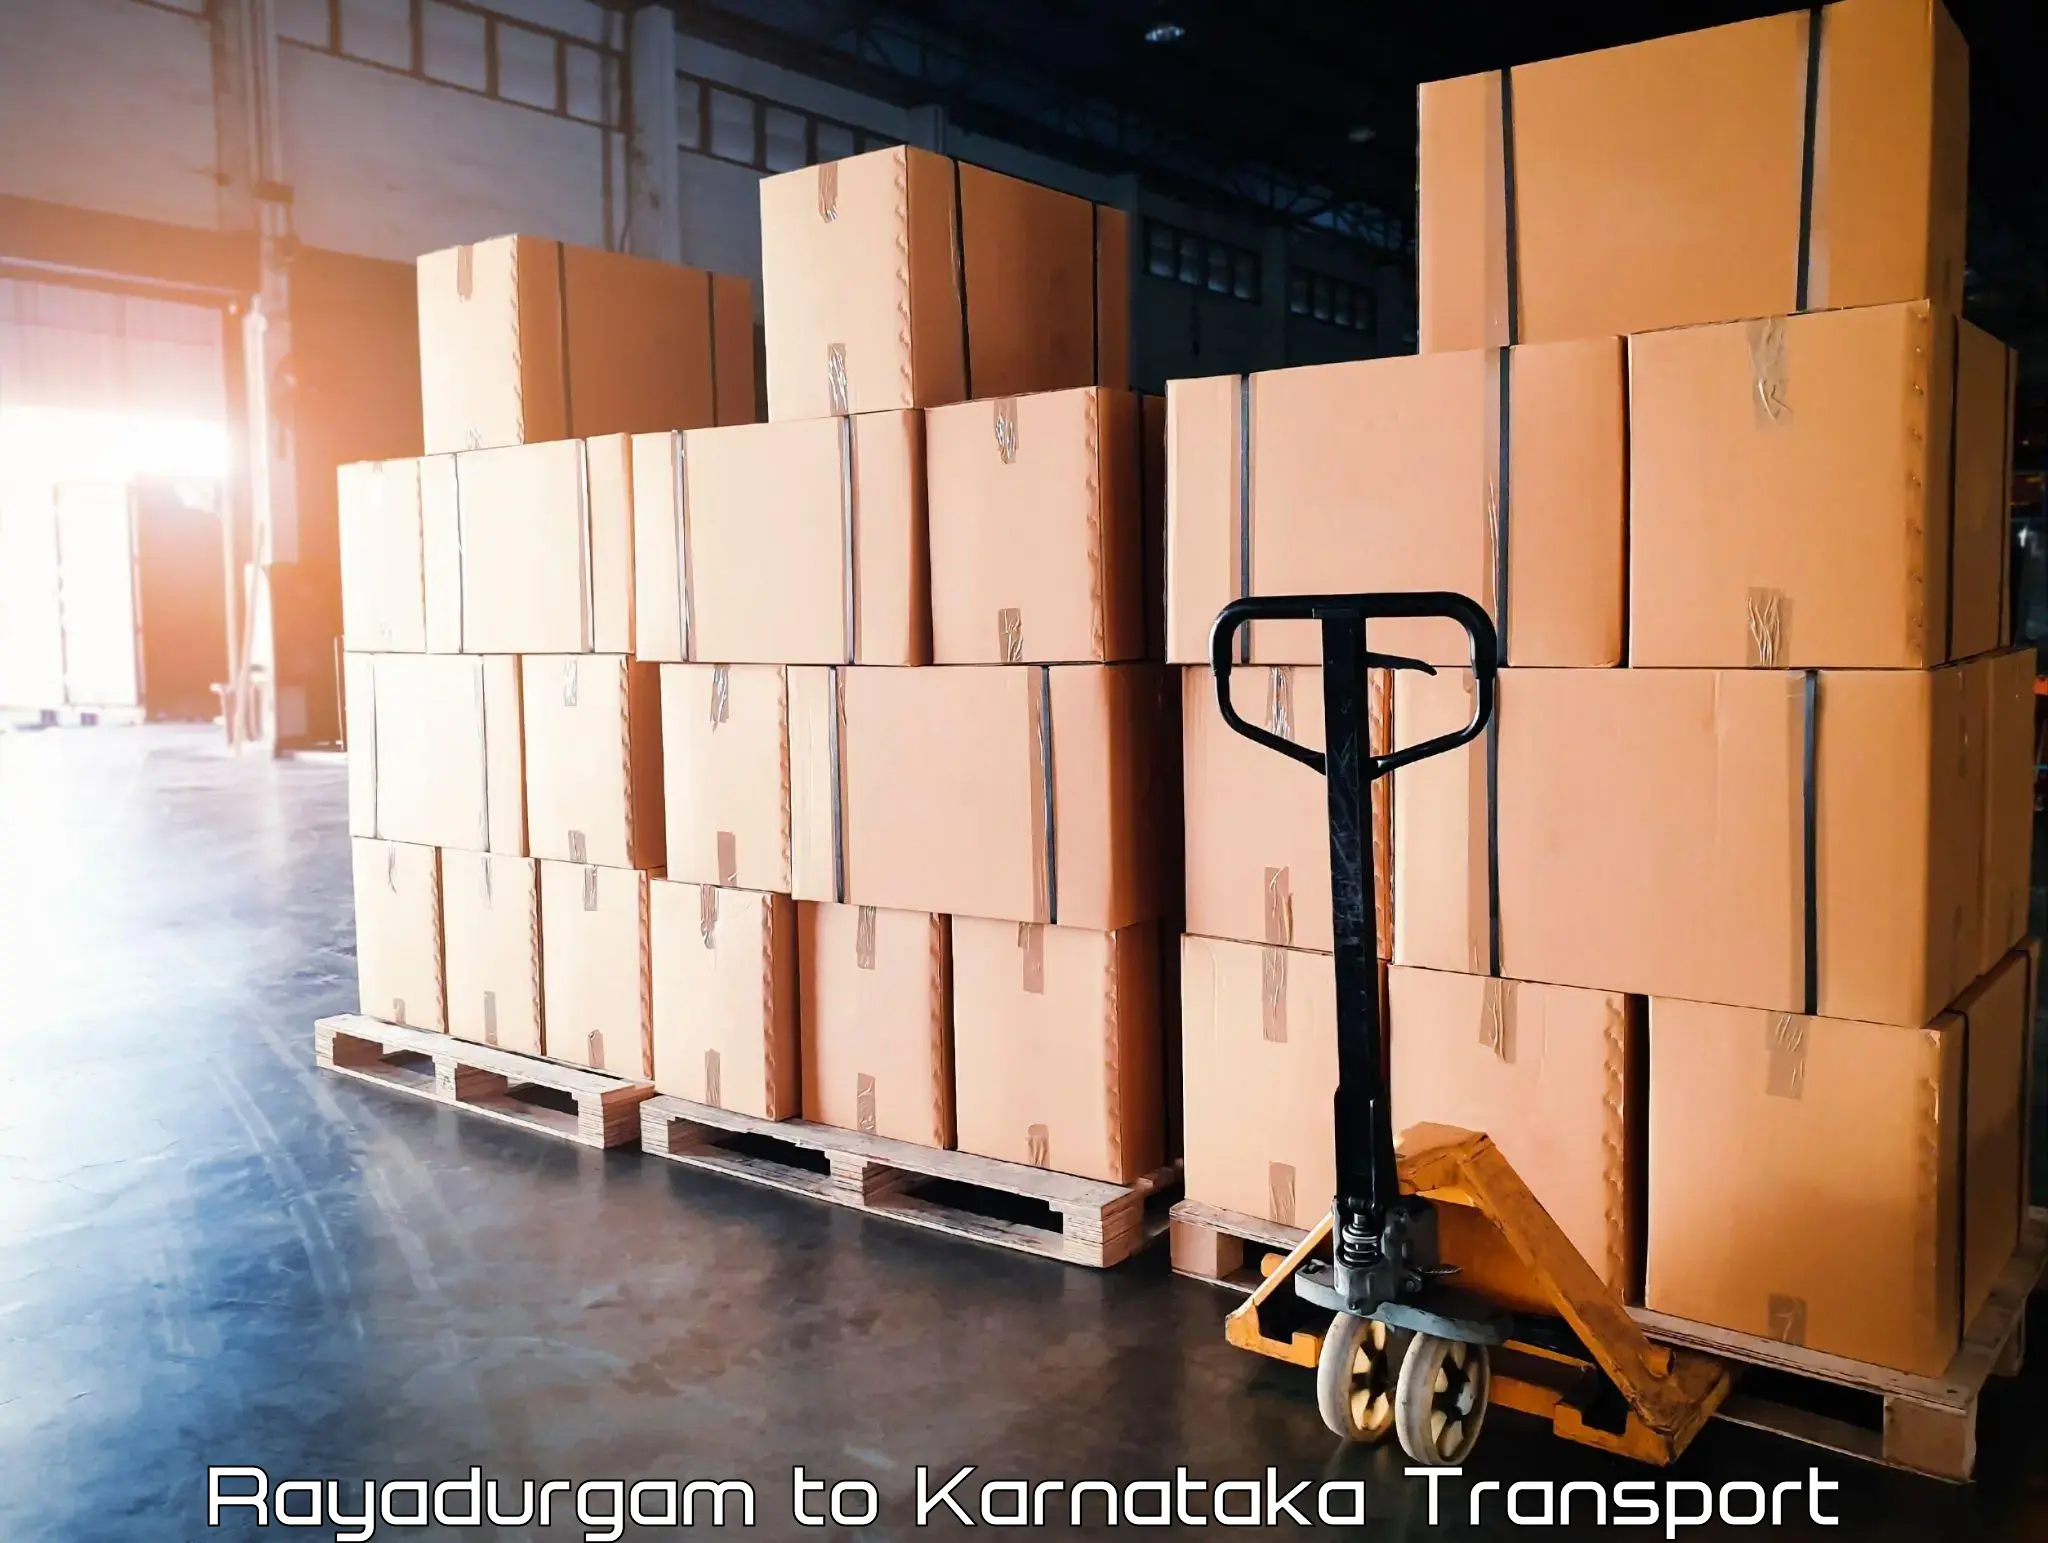 Cycle transportation service Rayadurgam to Karnataka